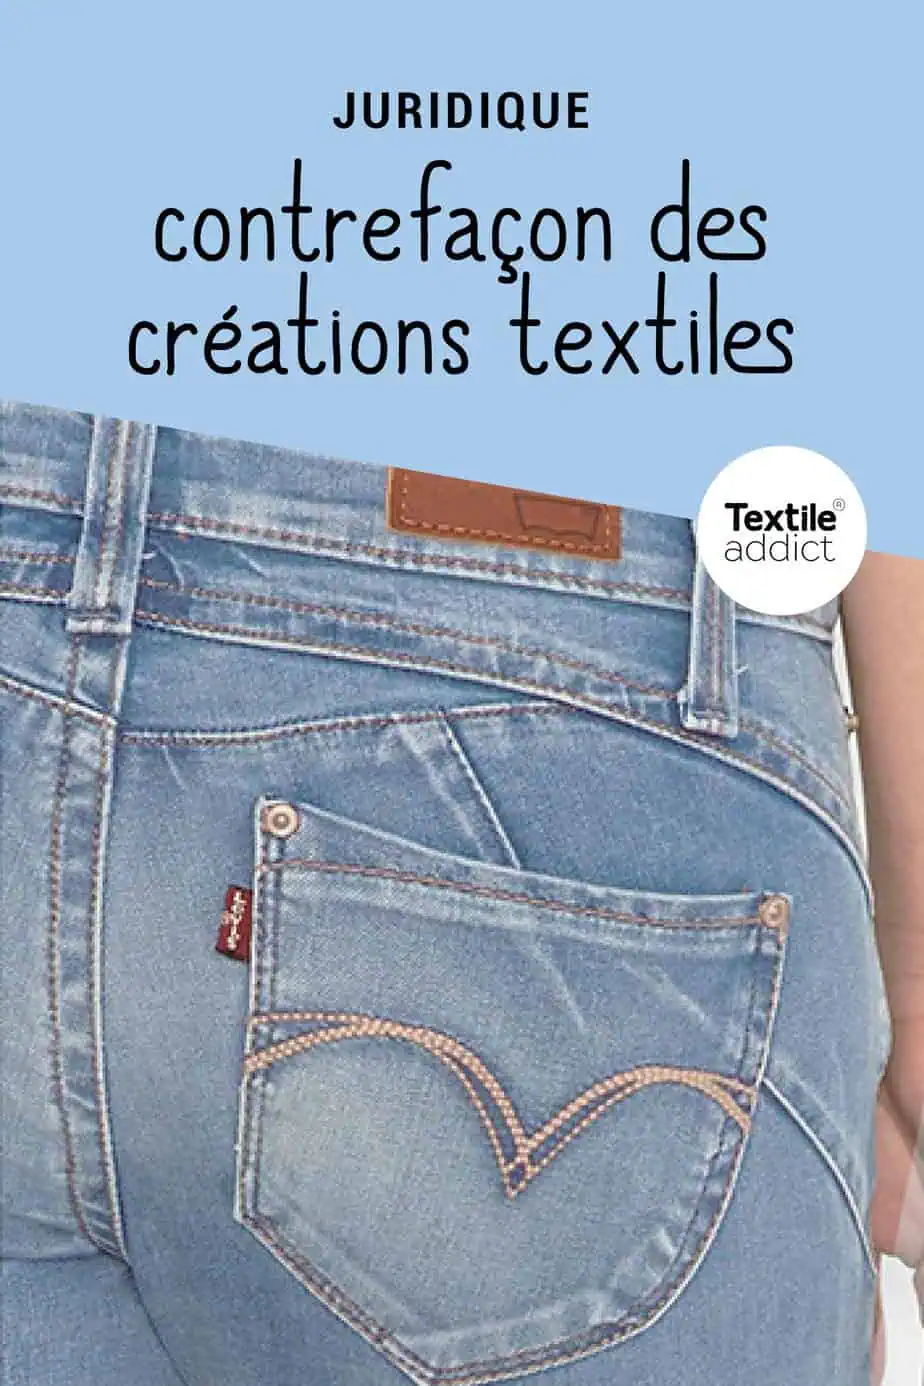 contrefacon des creations textiles